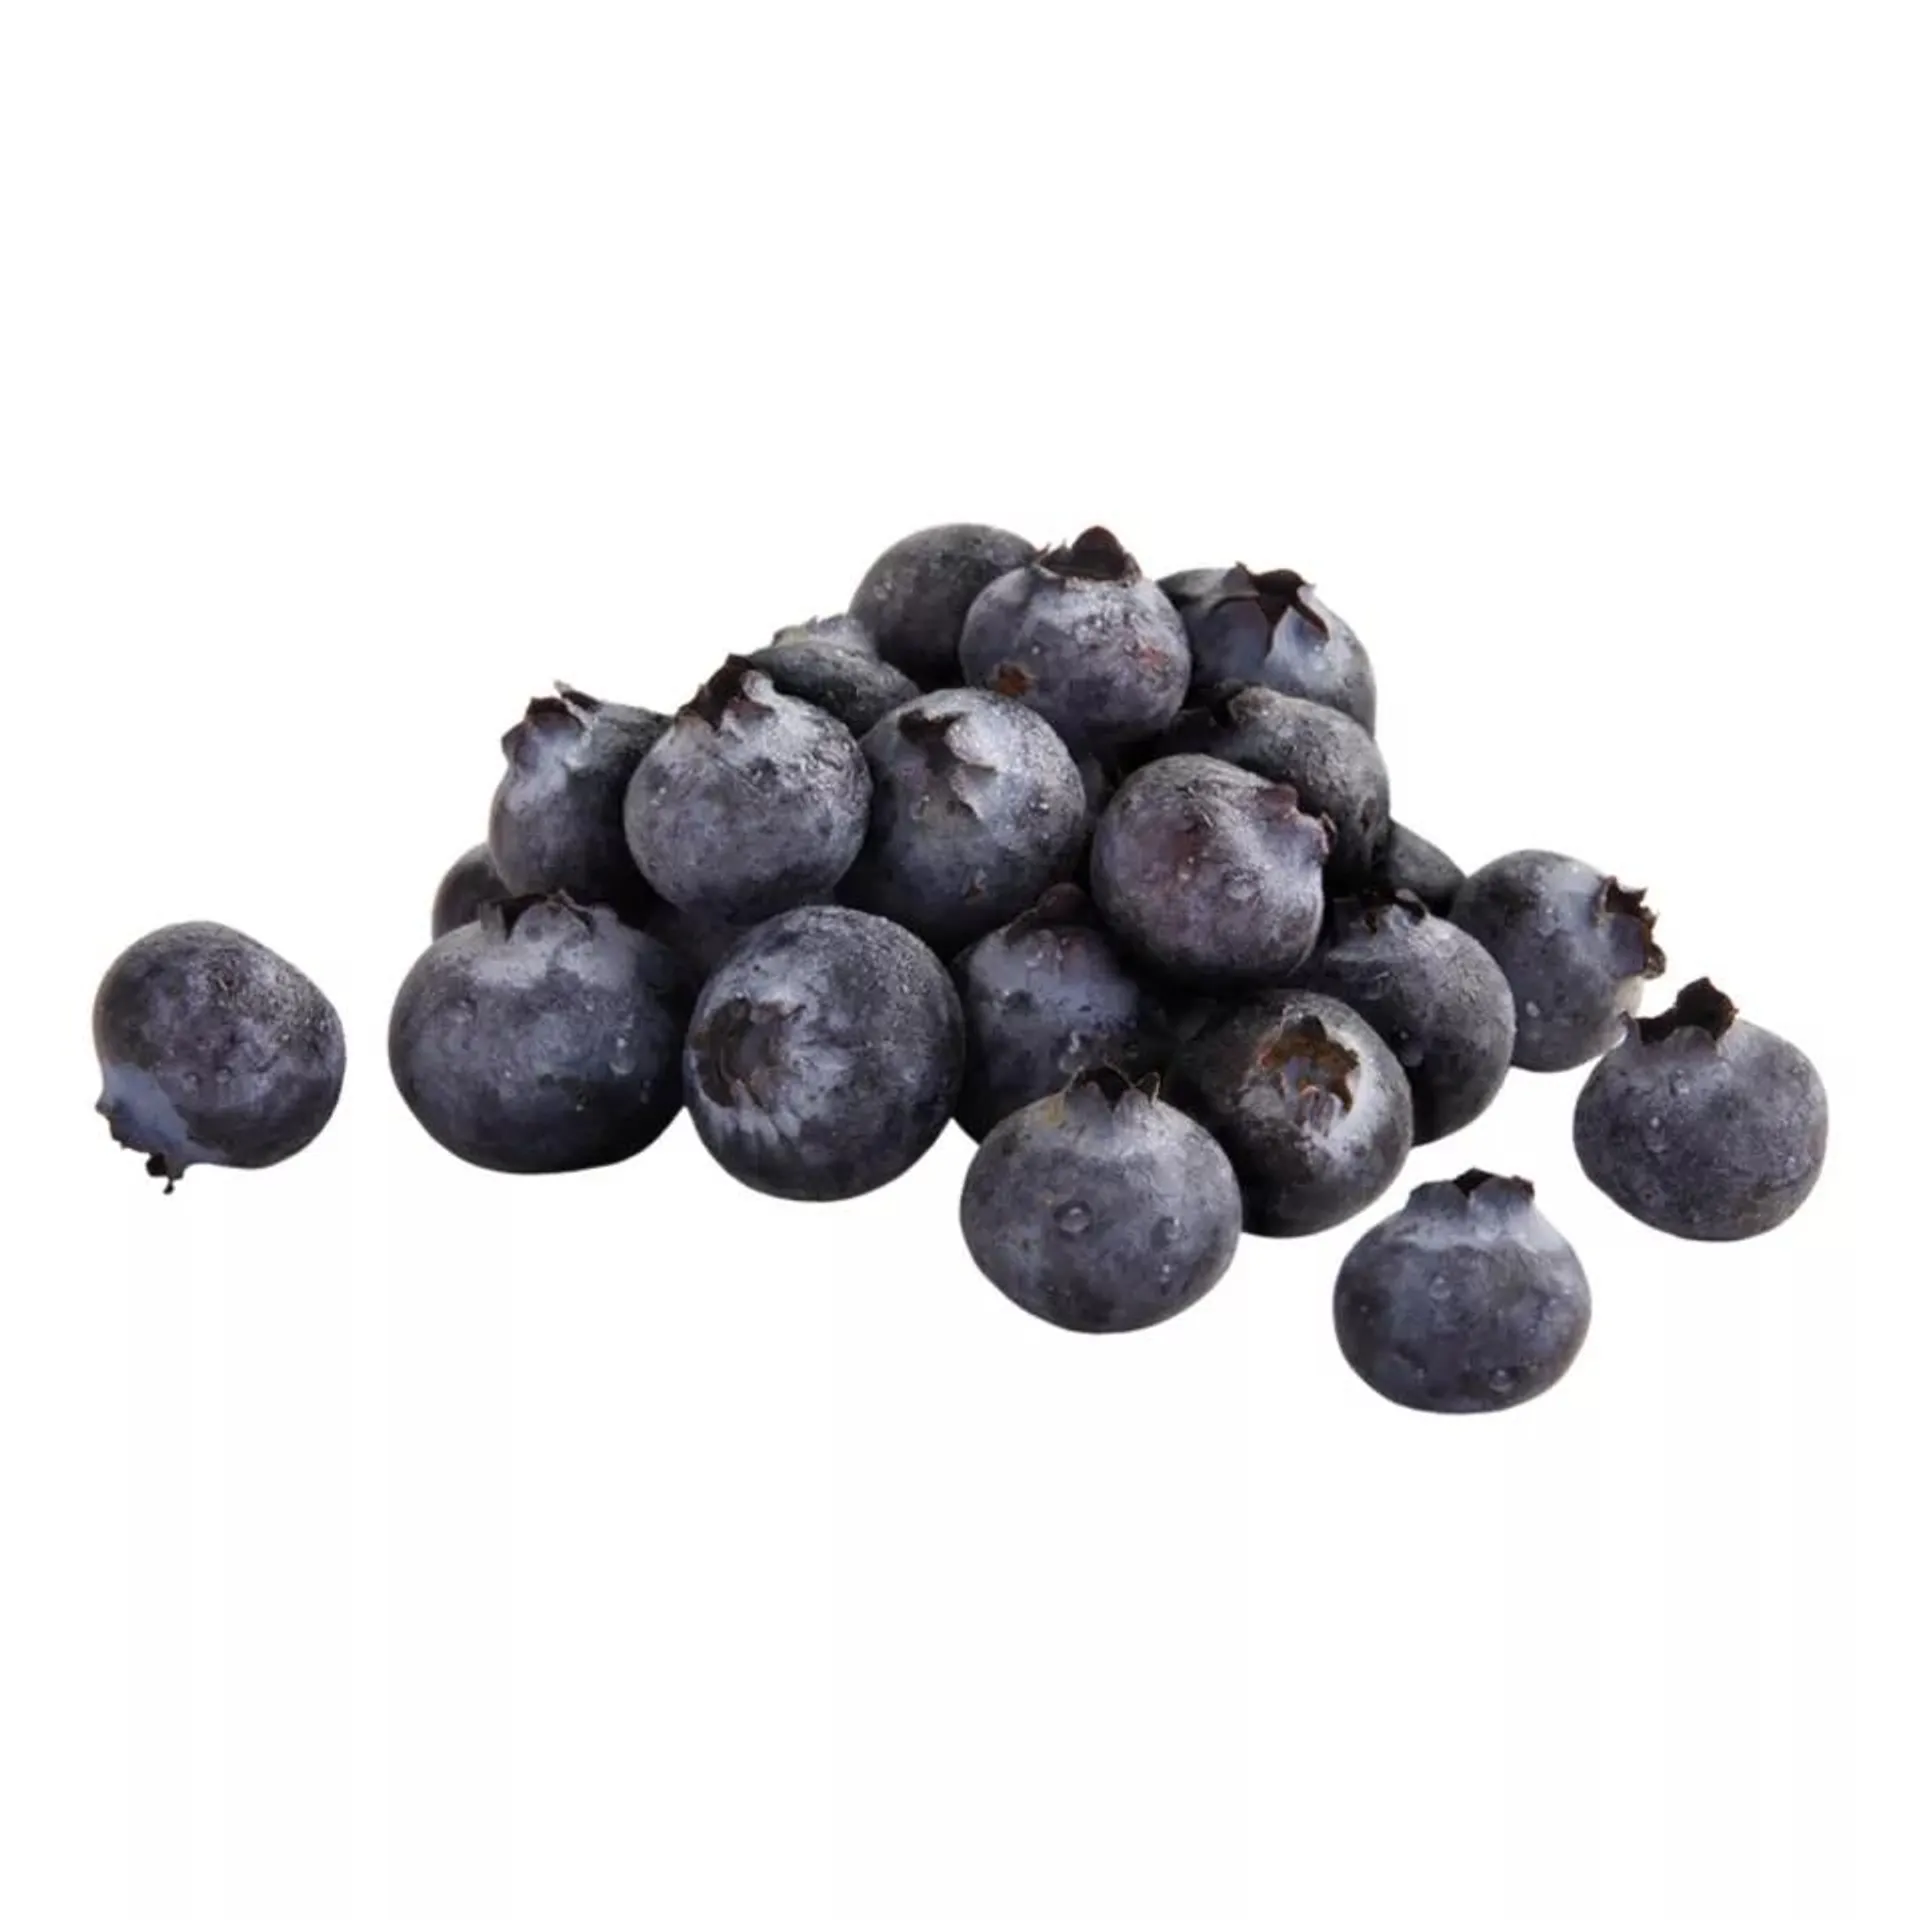 Organic Blueberries, 6 oz